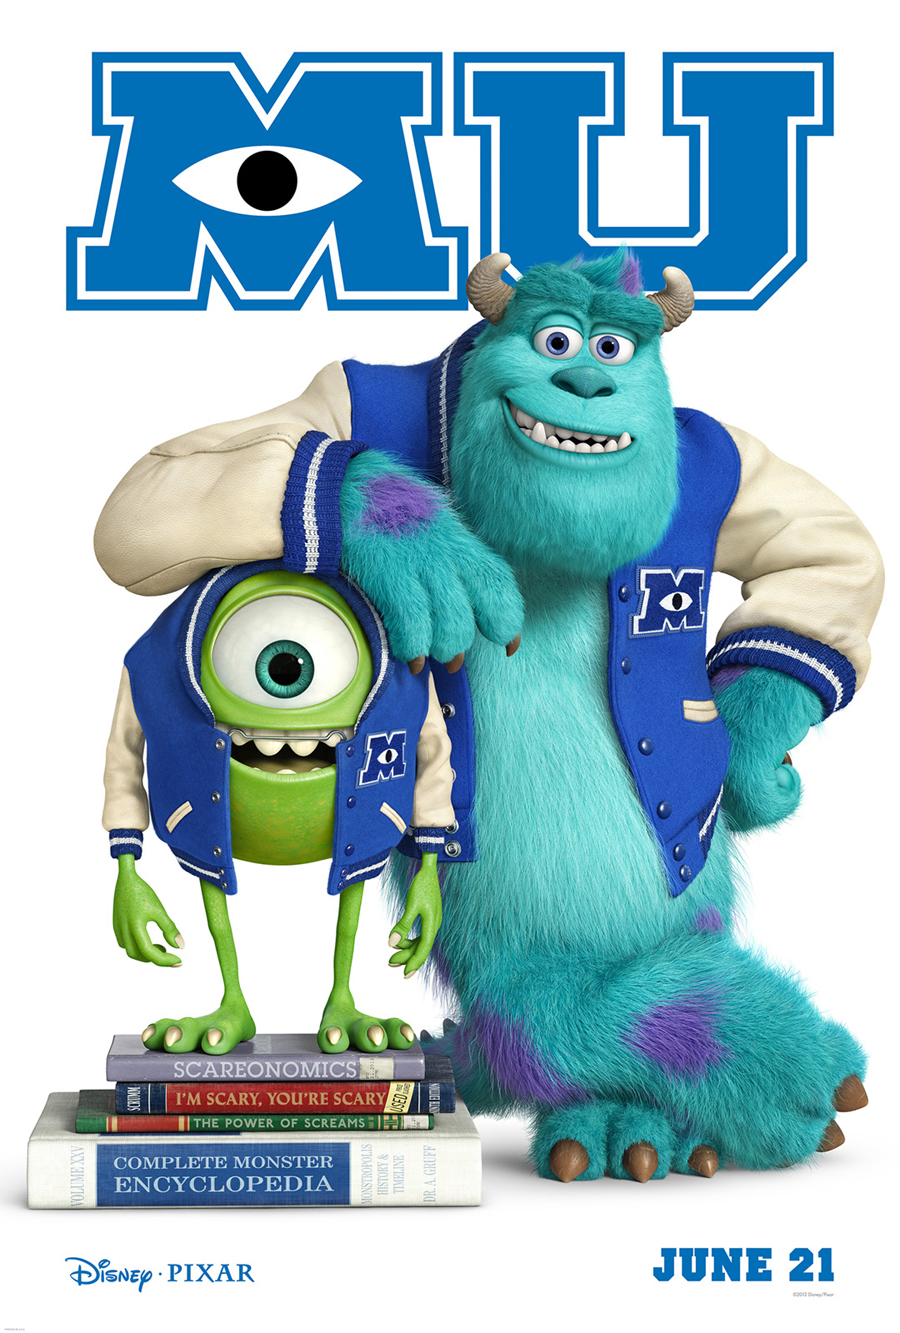 Disney Pixar’s Monsters University Continues to Impress